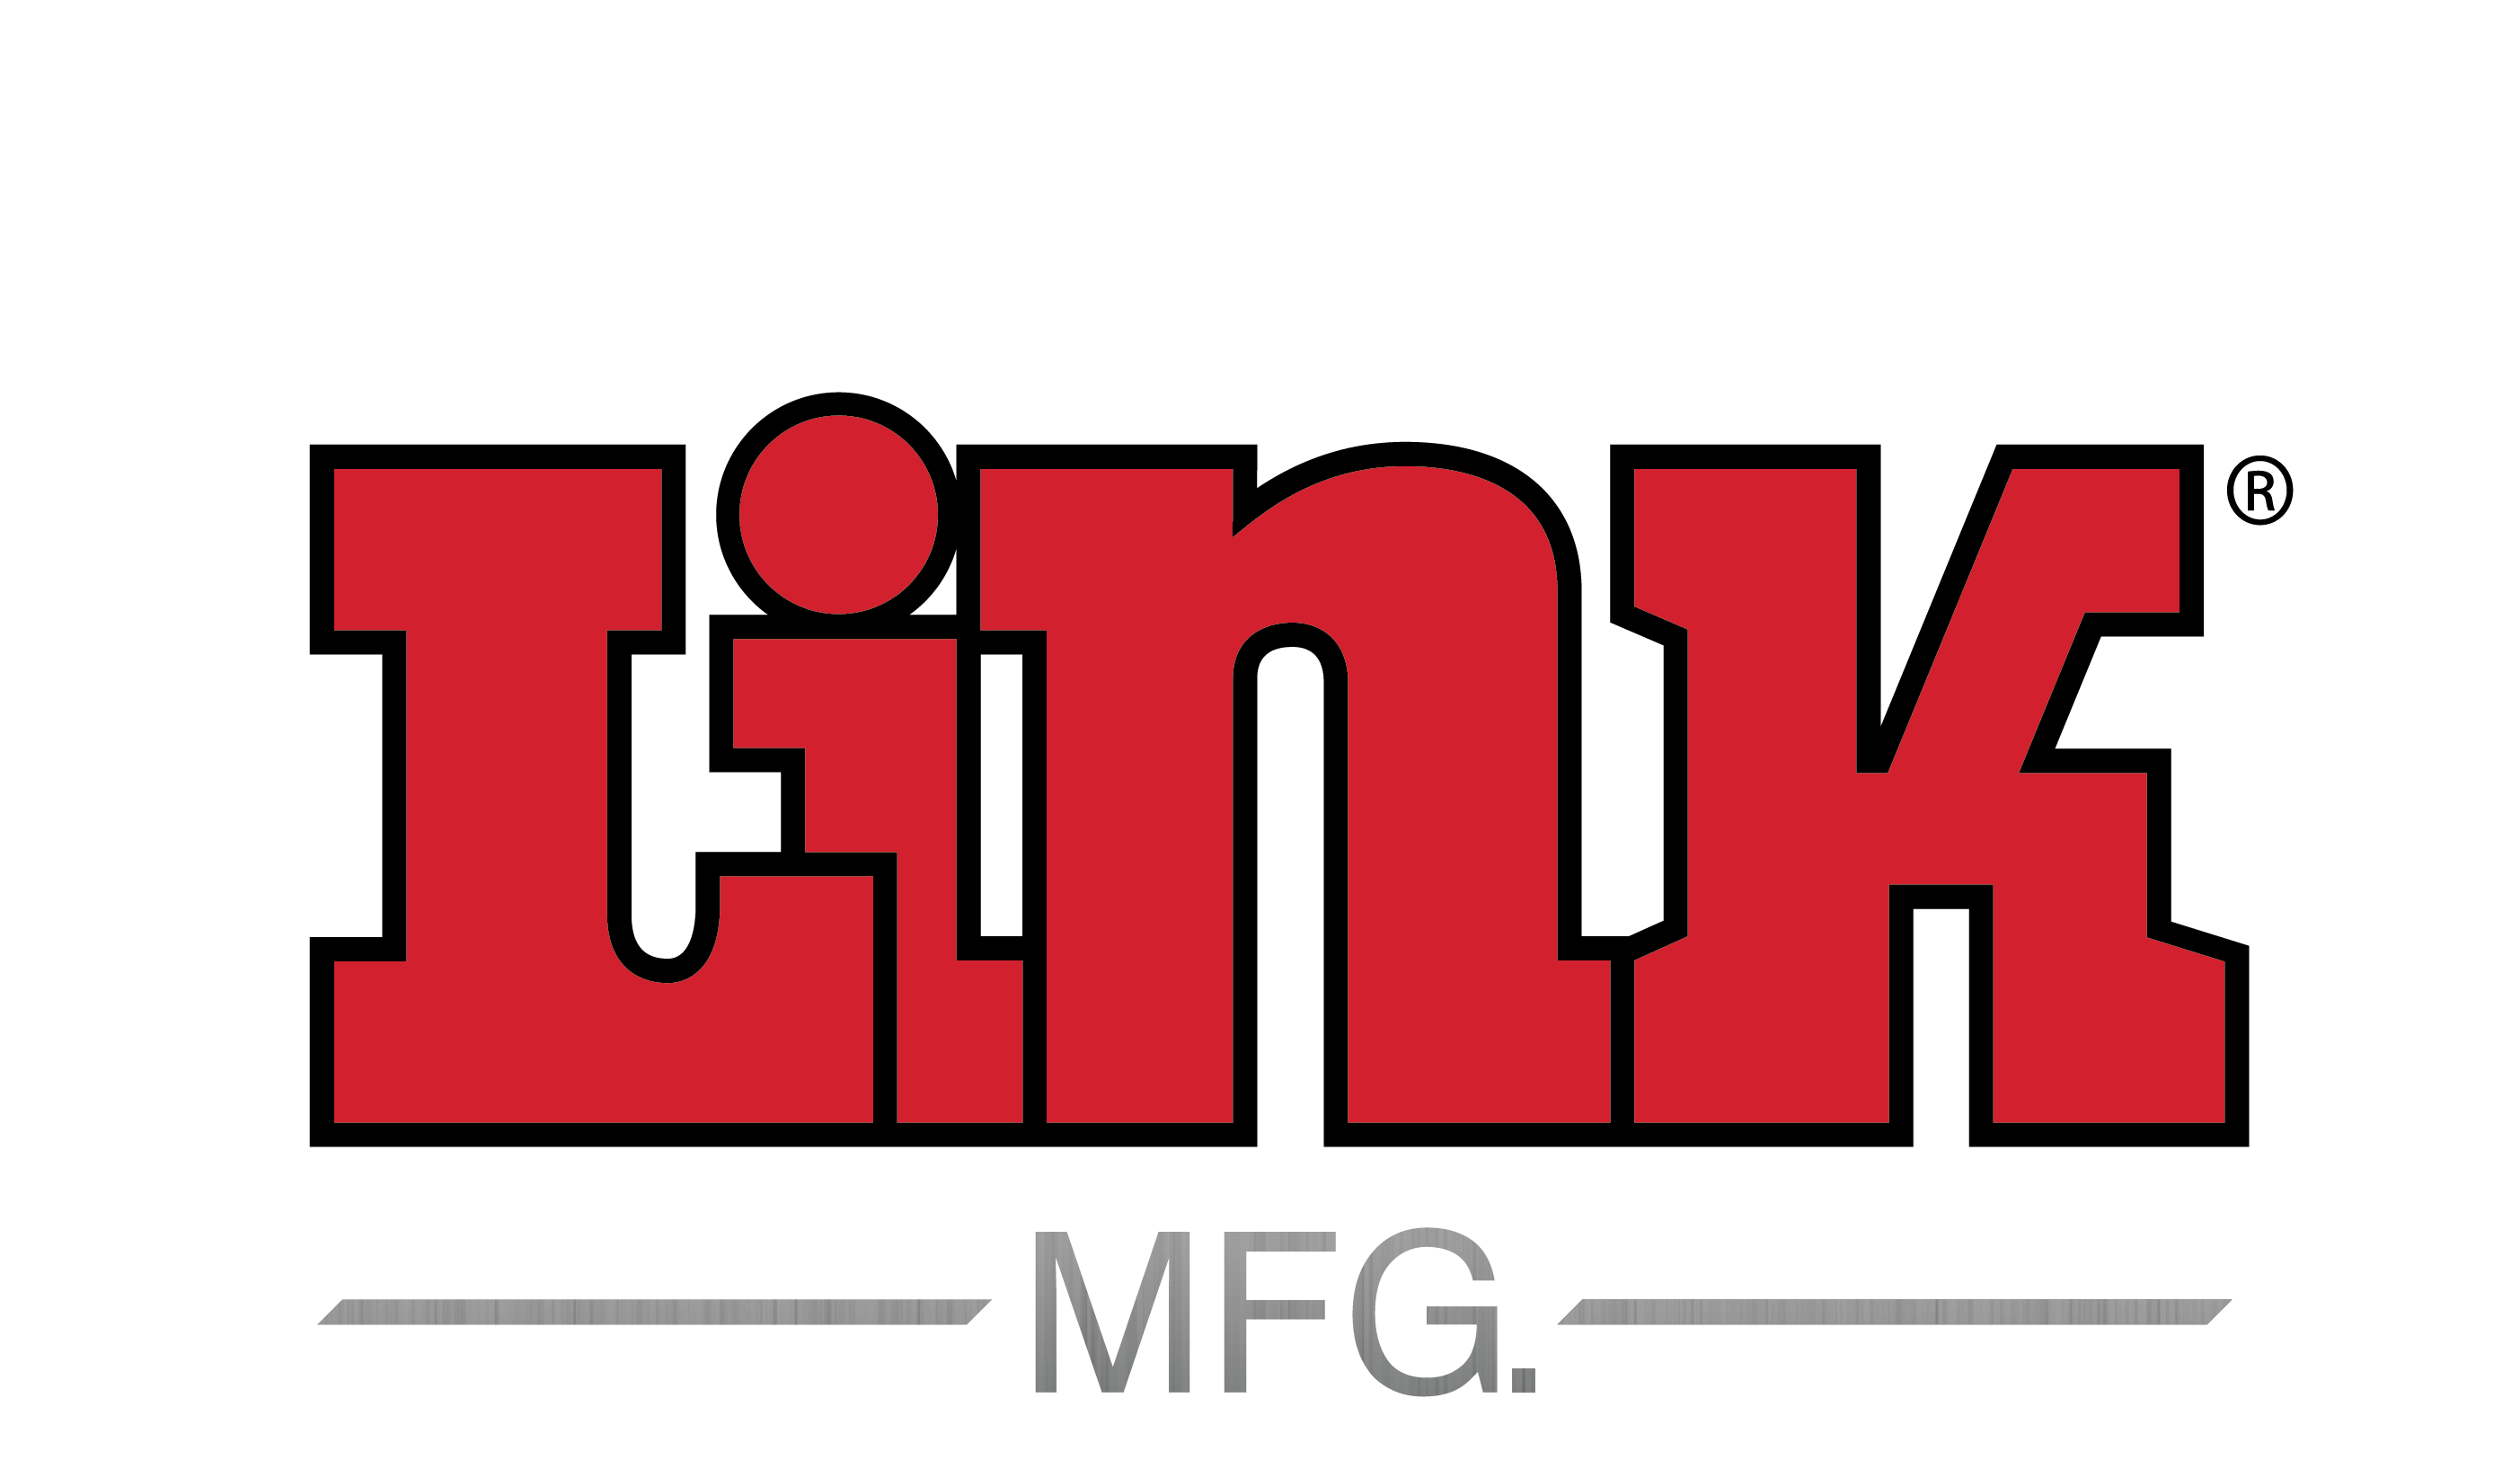 Mfg Logo - Link Logo with MFG - Link